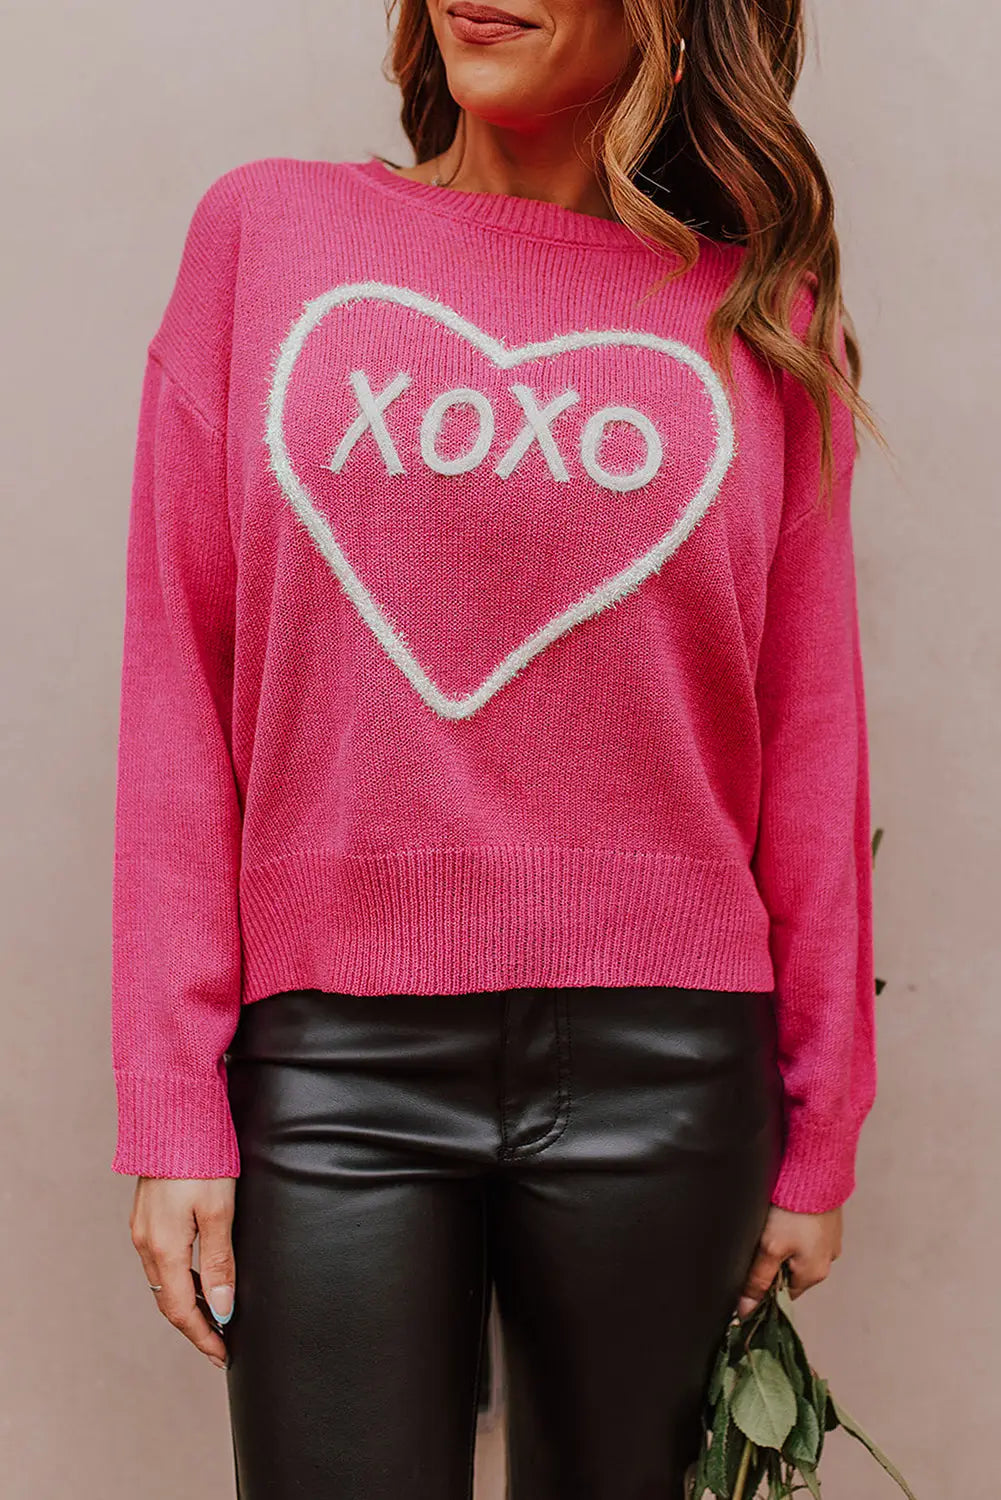 Rose heart xoxo pattern drop shoulder rib knit sweater - l / 55% acrylic + 45% cotton - sweaters & cardigans